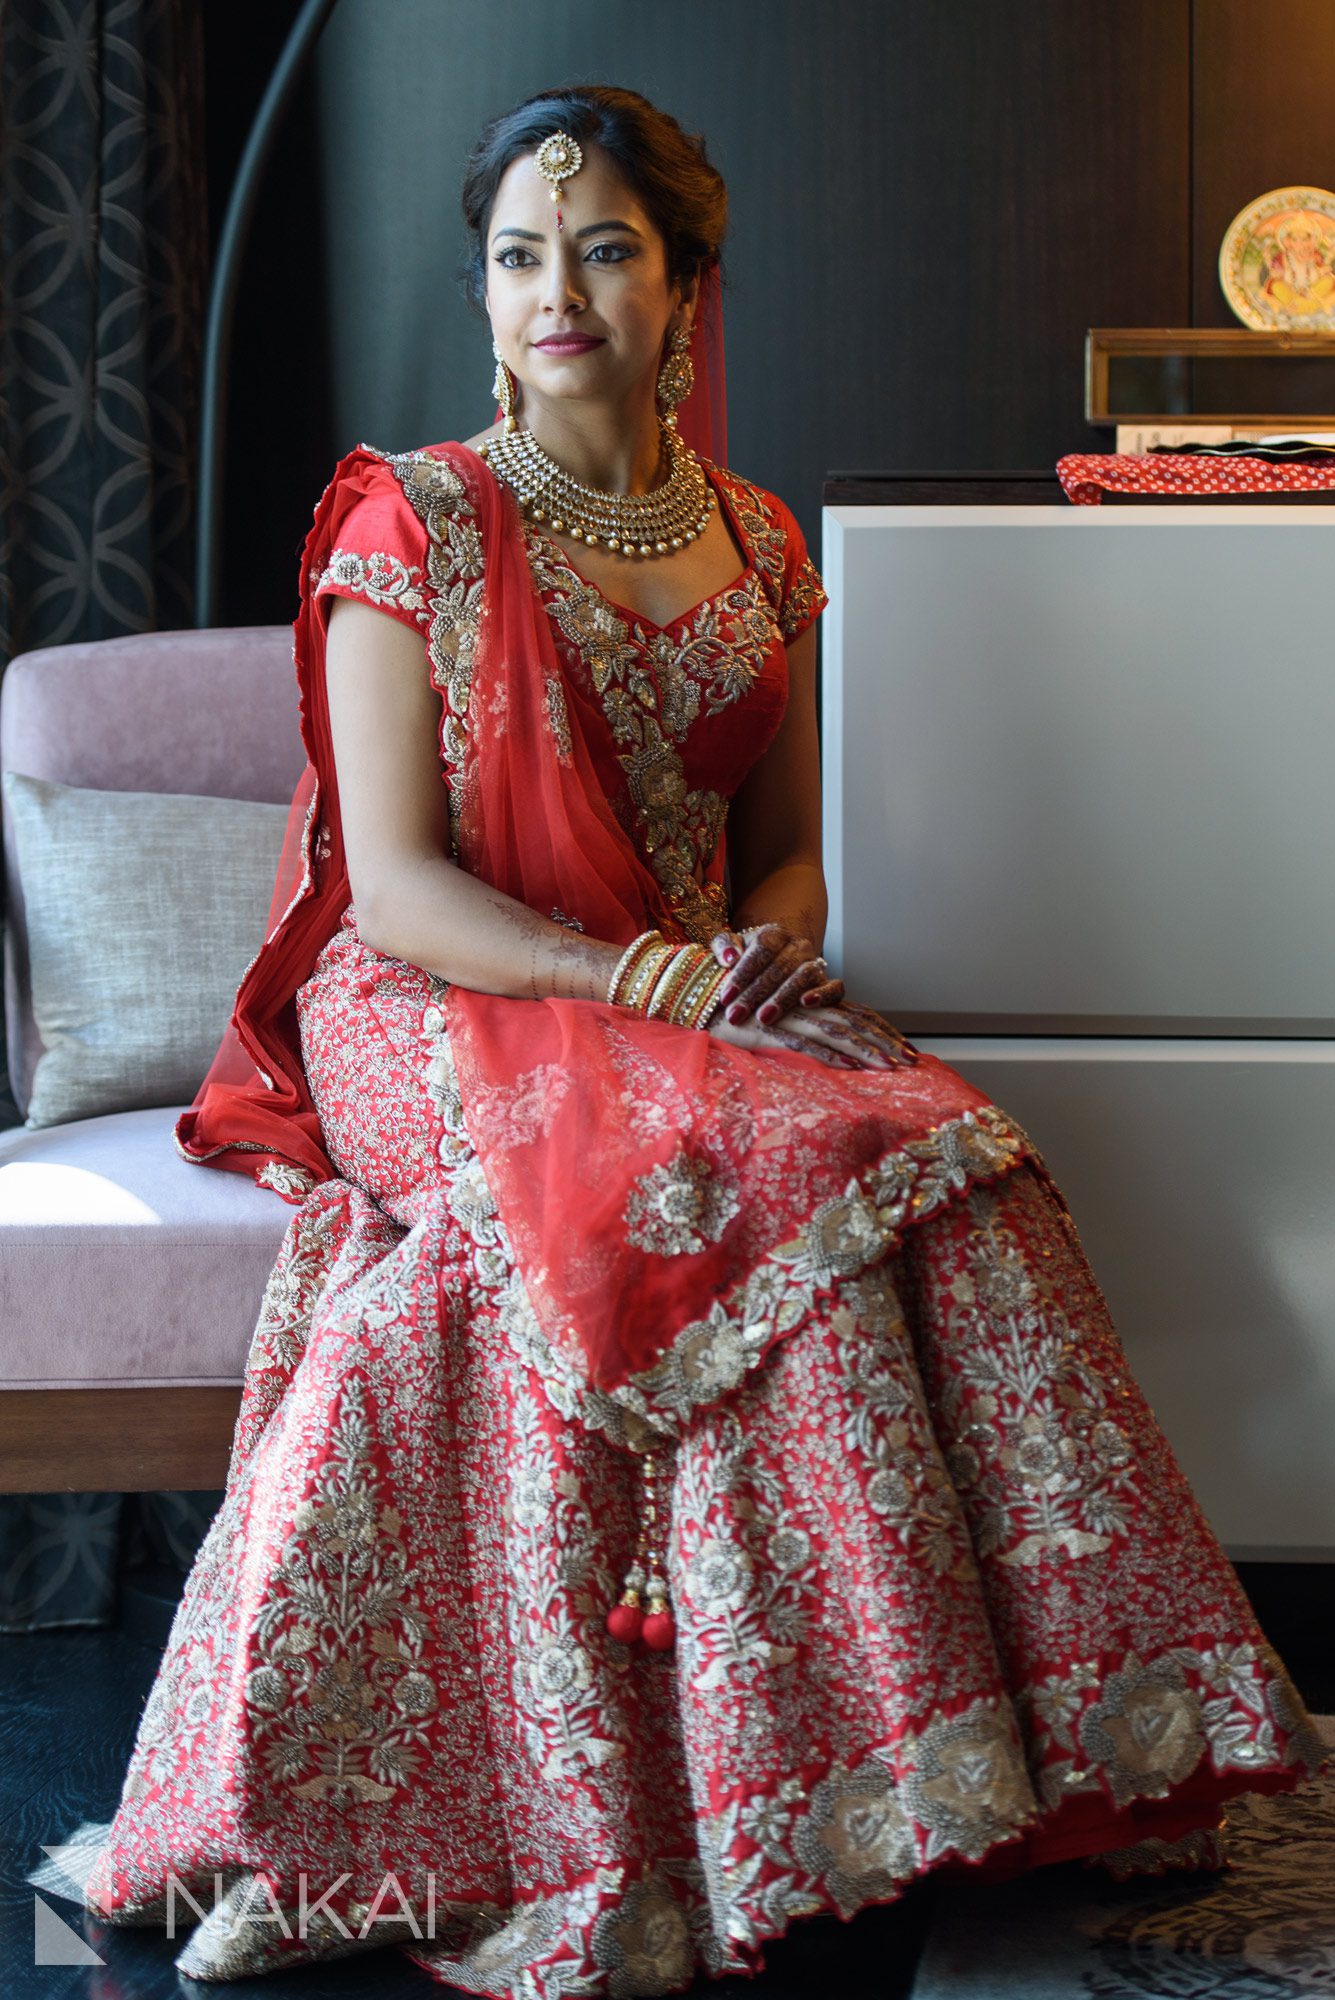 chicago loews wedding photos indian hindu